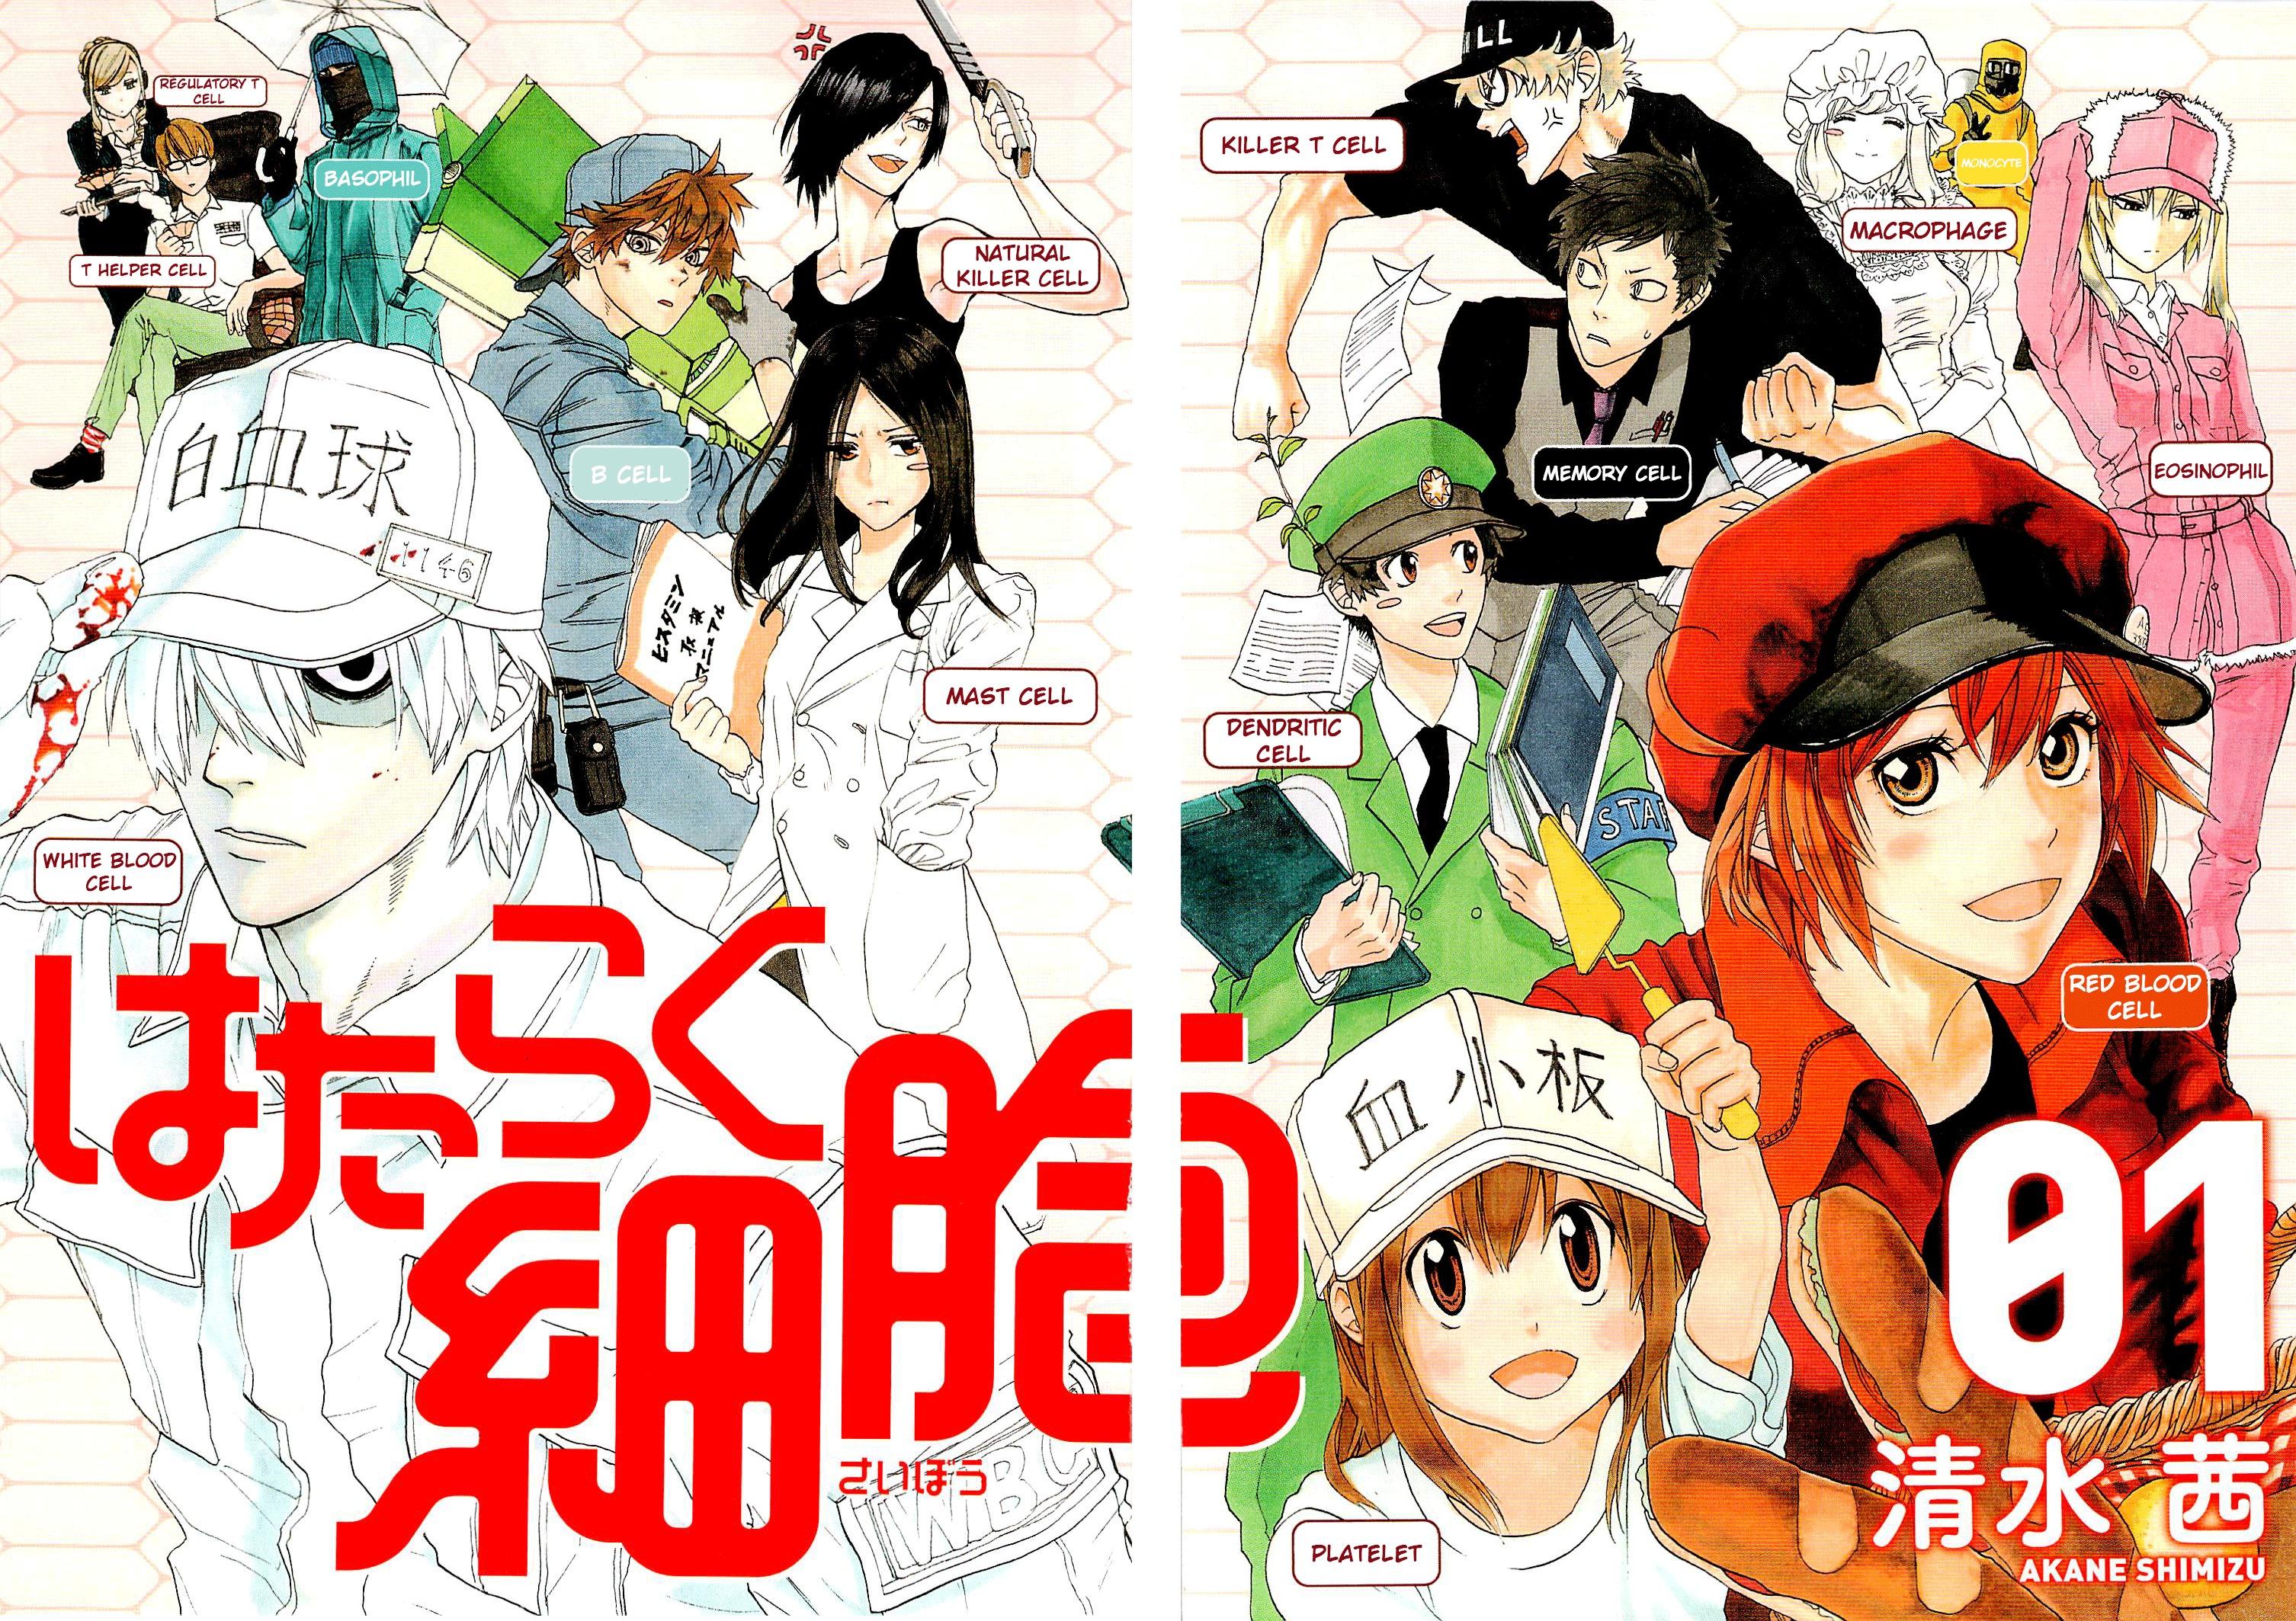 Manga 'Hataraku Saibou' Gets TV Anime for Summer 2018